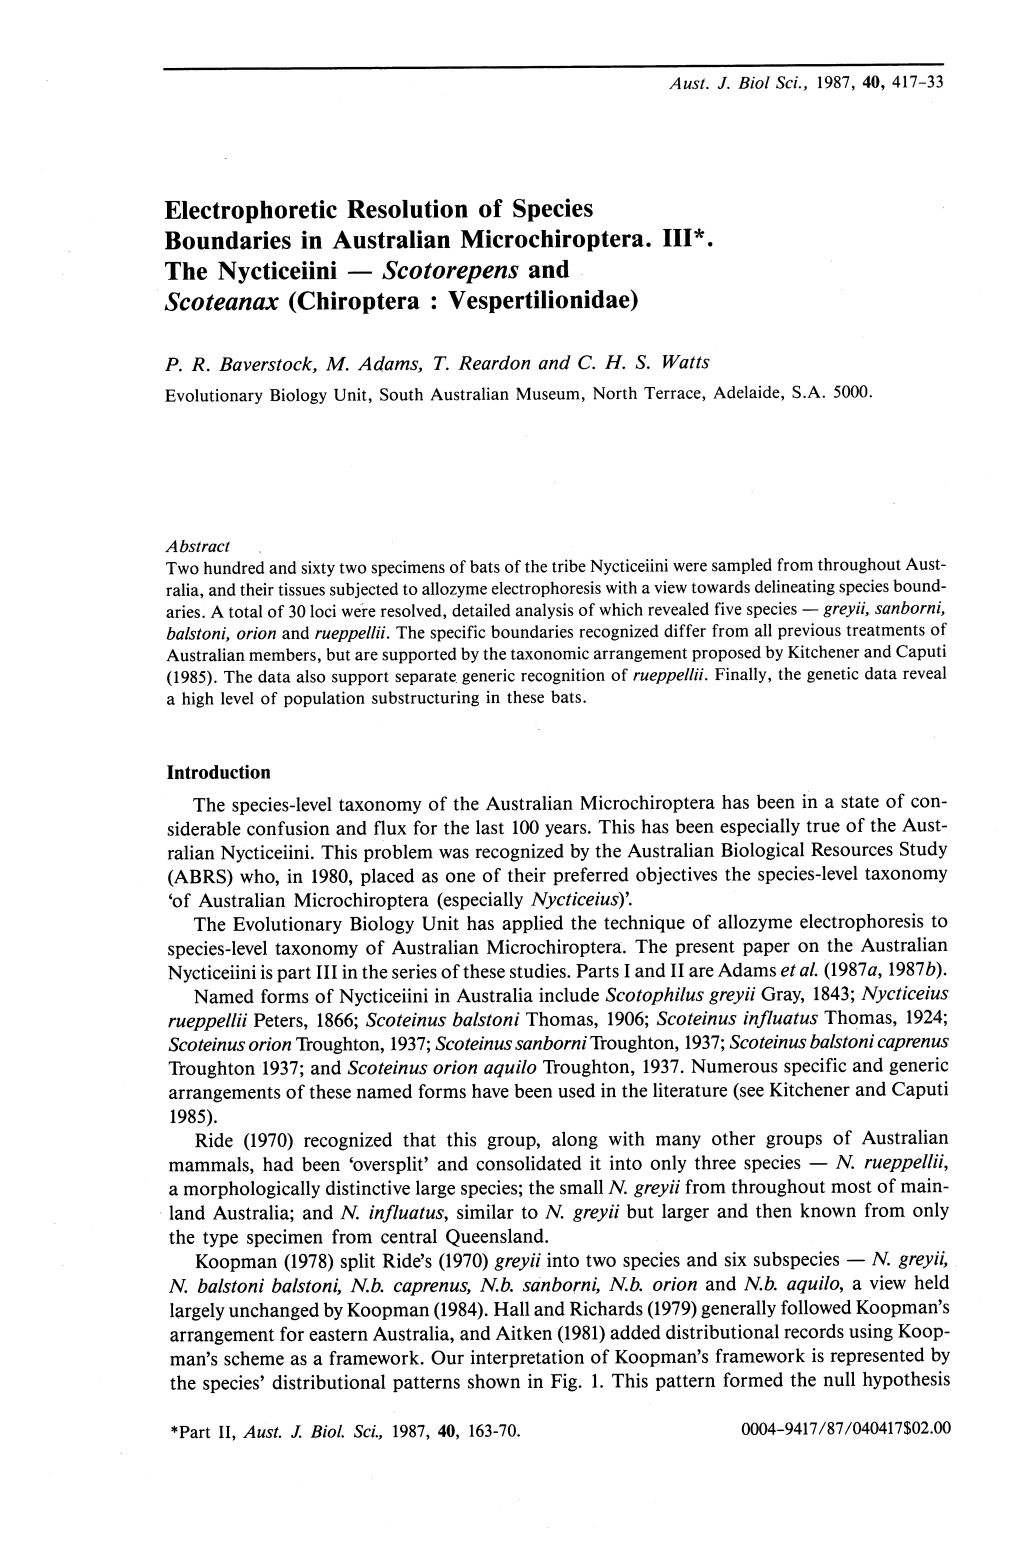 Scotorepens and Scoteanax (Chiroptera : Vespertilionidae)